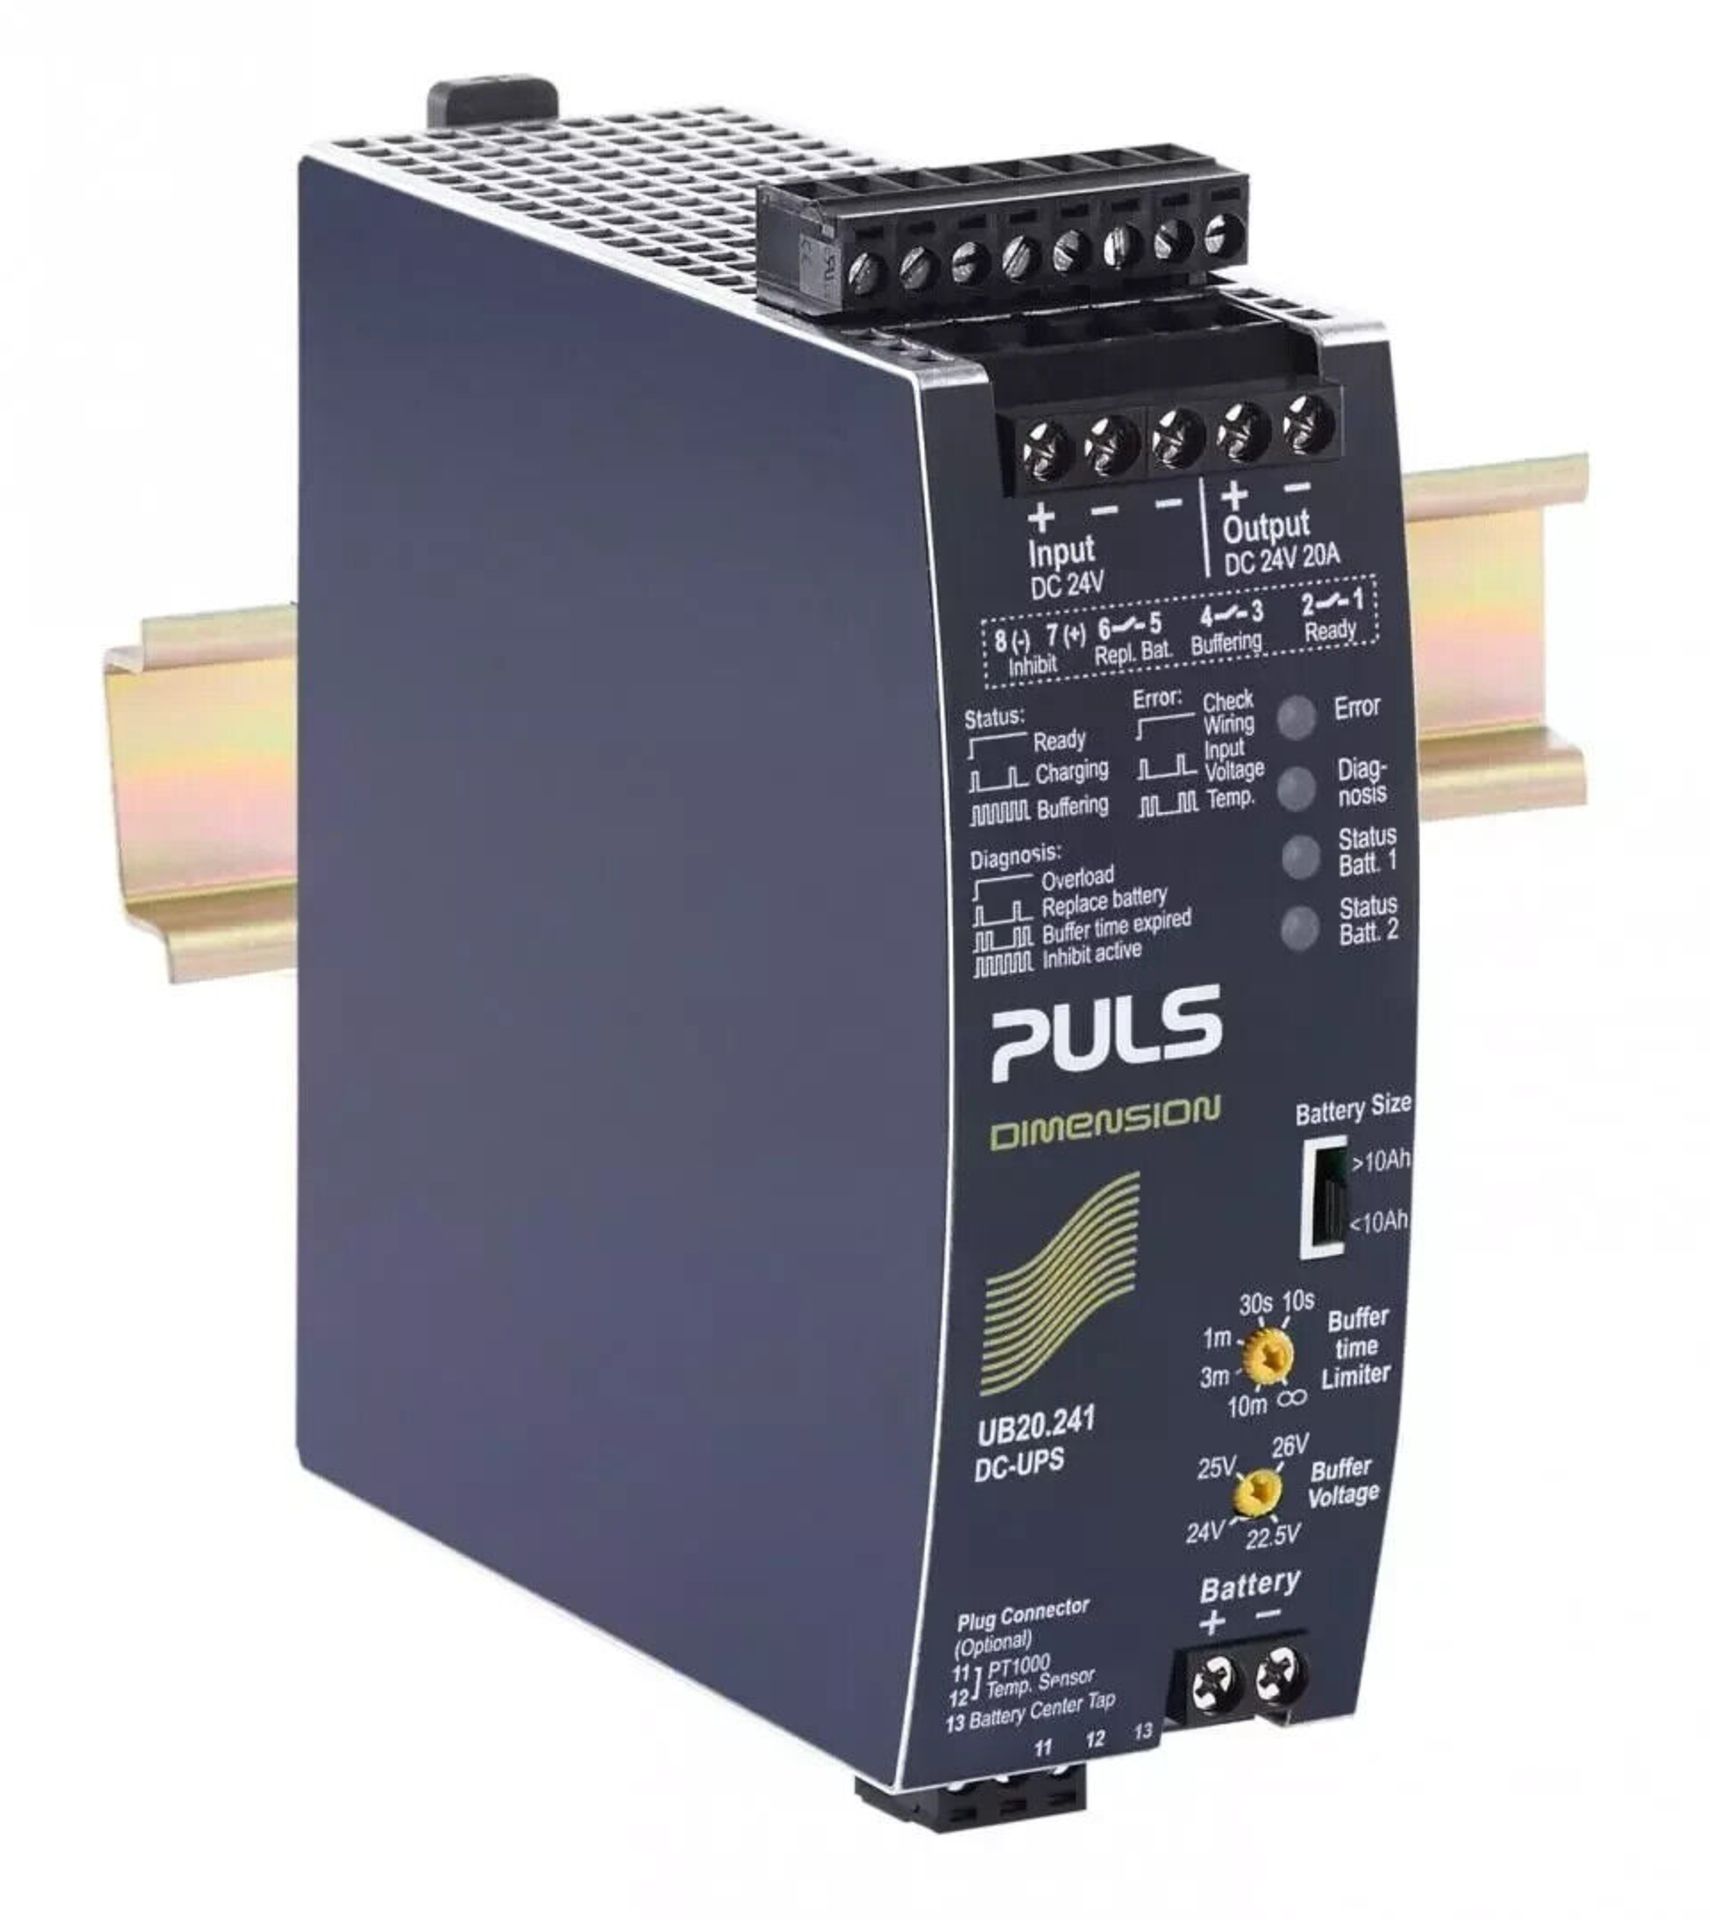 PULS UB20.241 DC Uninterruptible Power Supply - Image 2 of 3